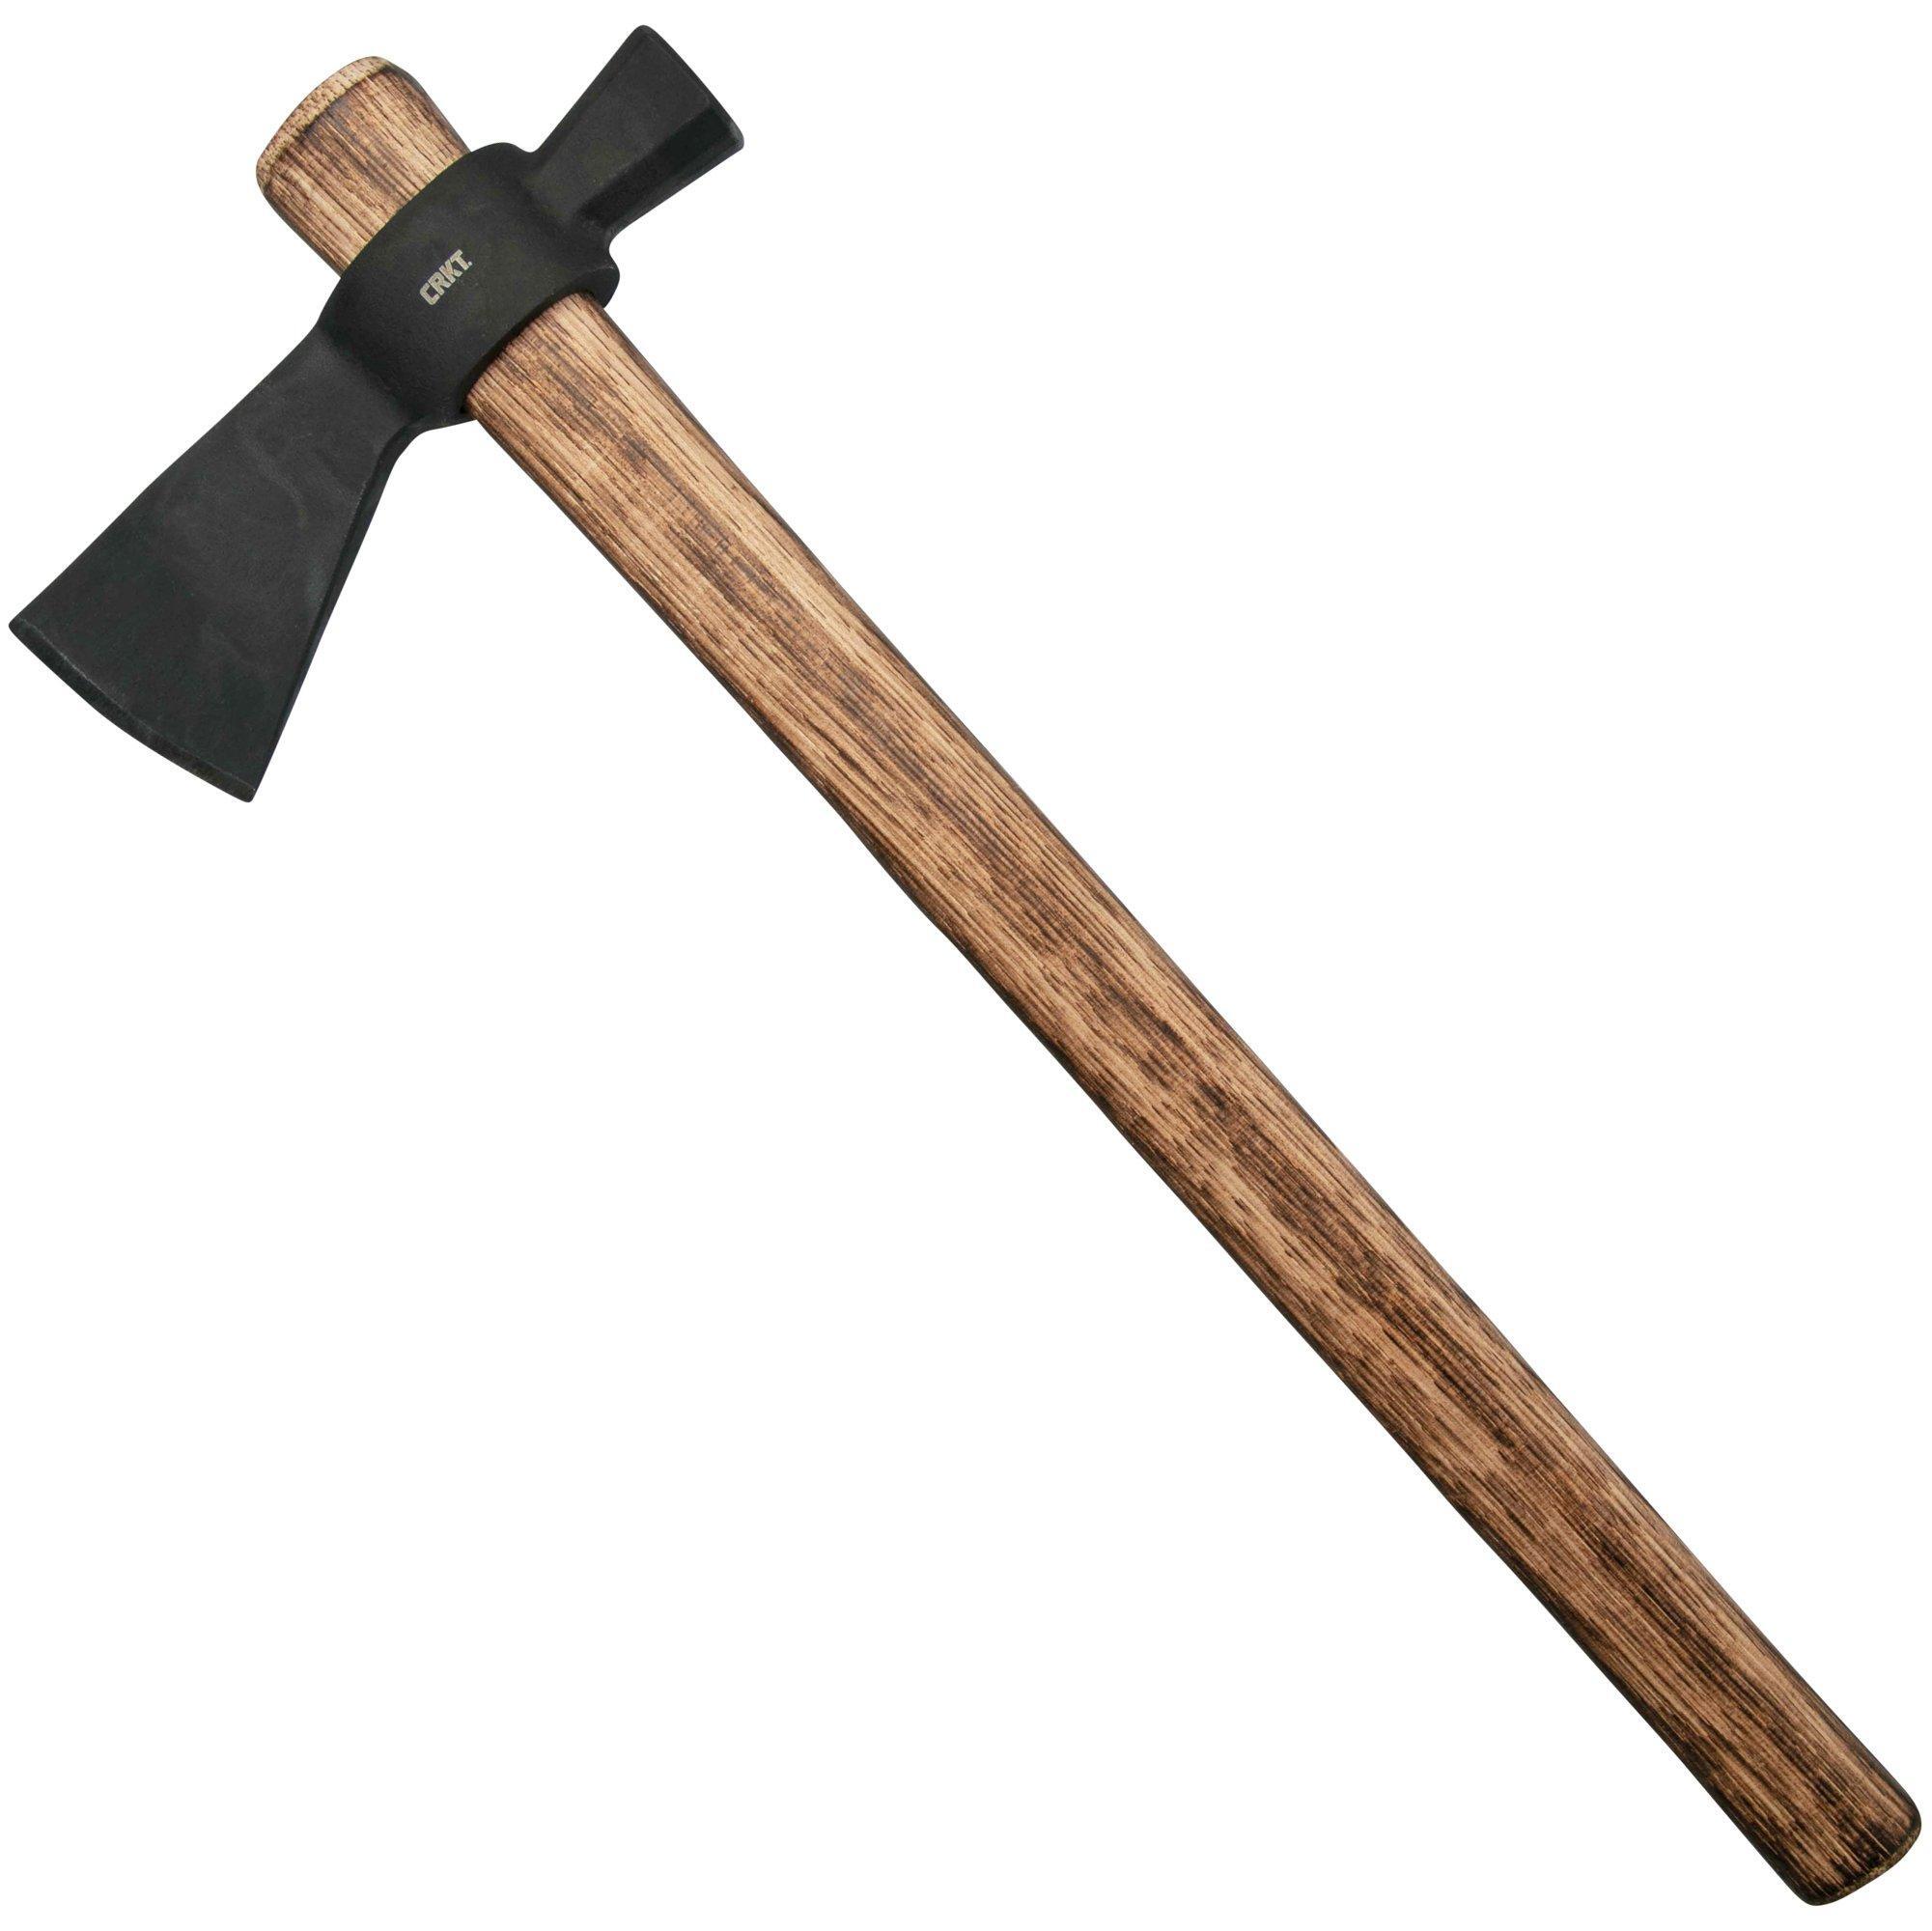 CRKT CRKT Chogan Hammer, 2724, tomahawk, Ryan Johnson design